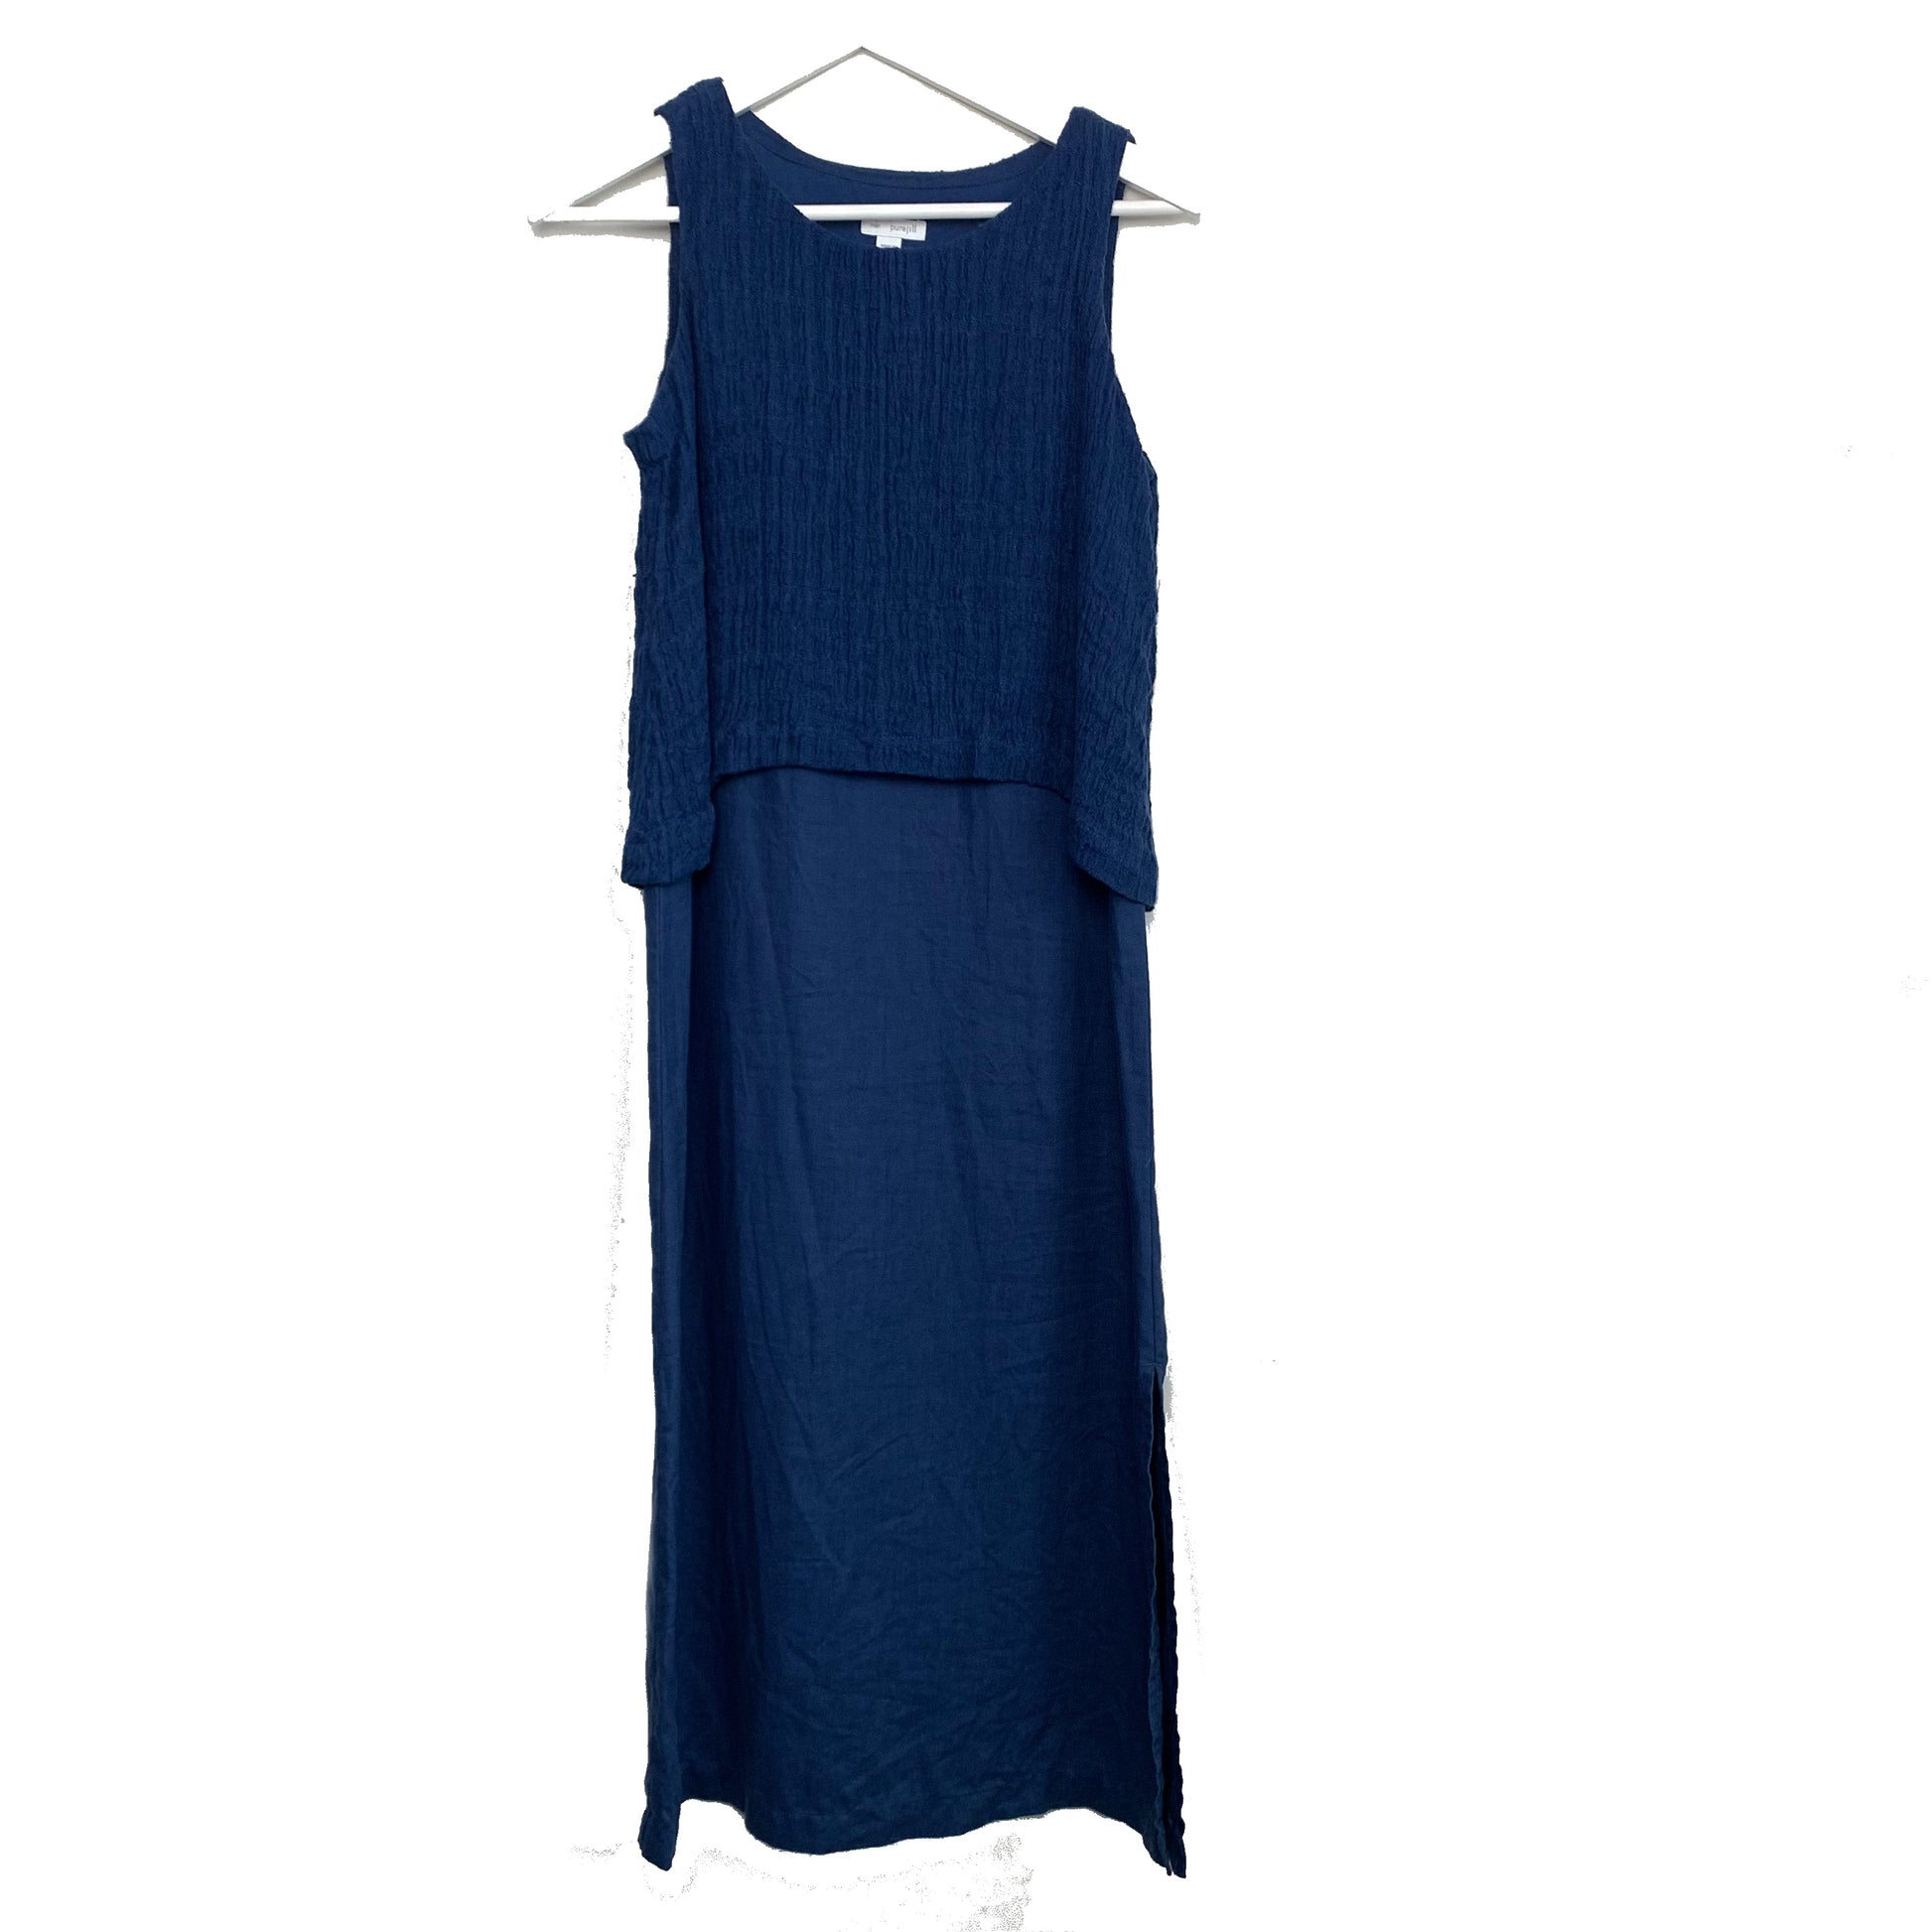 J. Jill Wearever Collection Petite XS Patterned Sleeveless Rayon Blend Dress